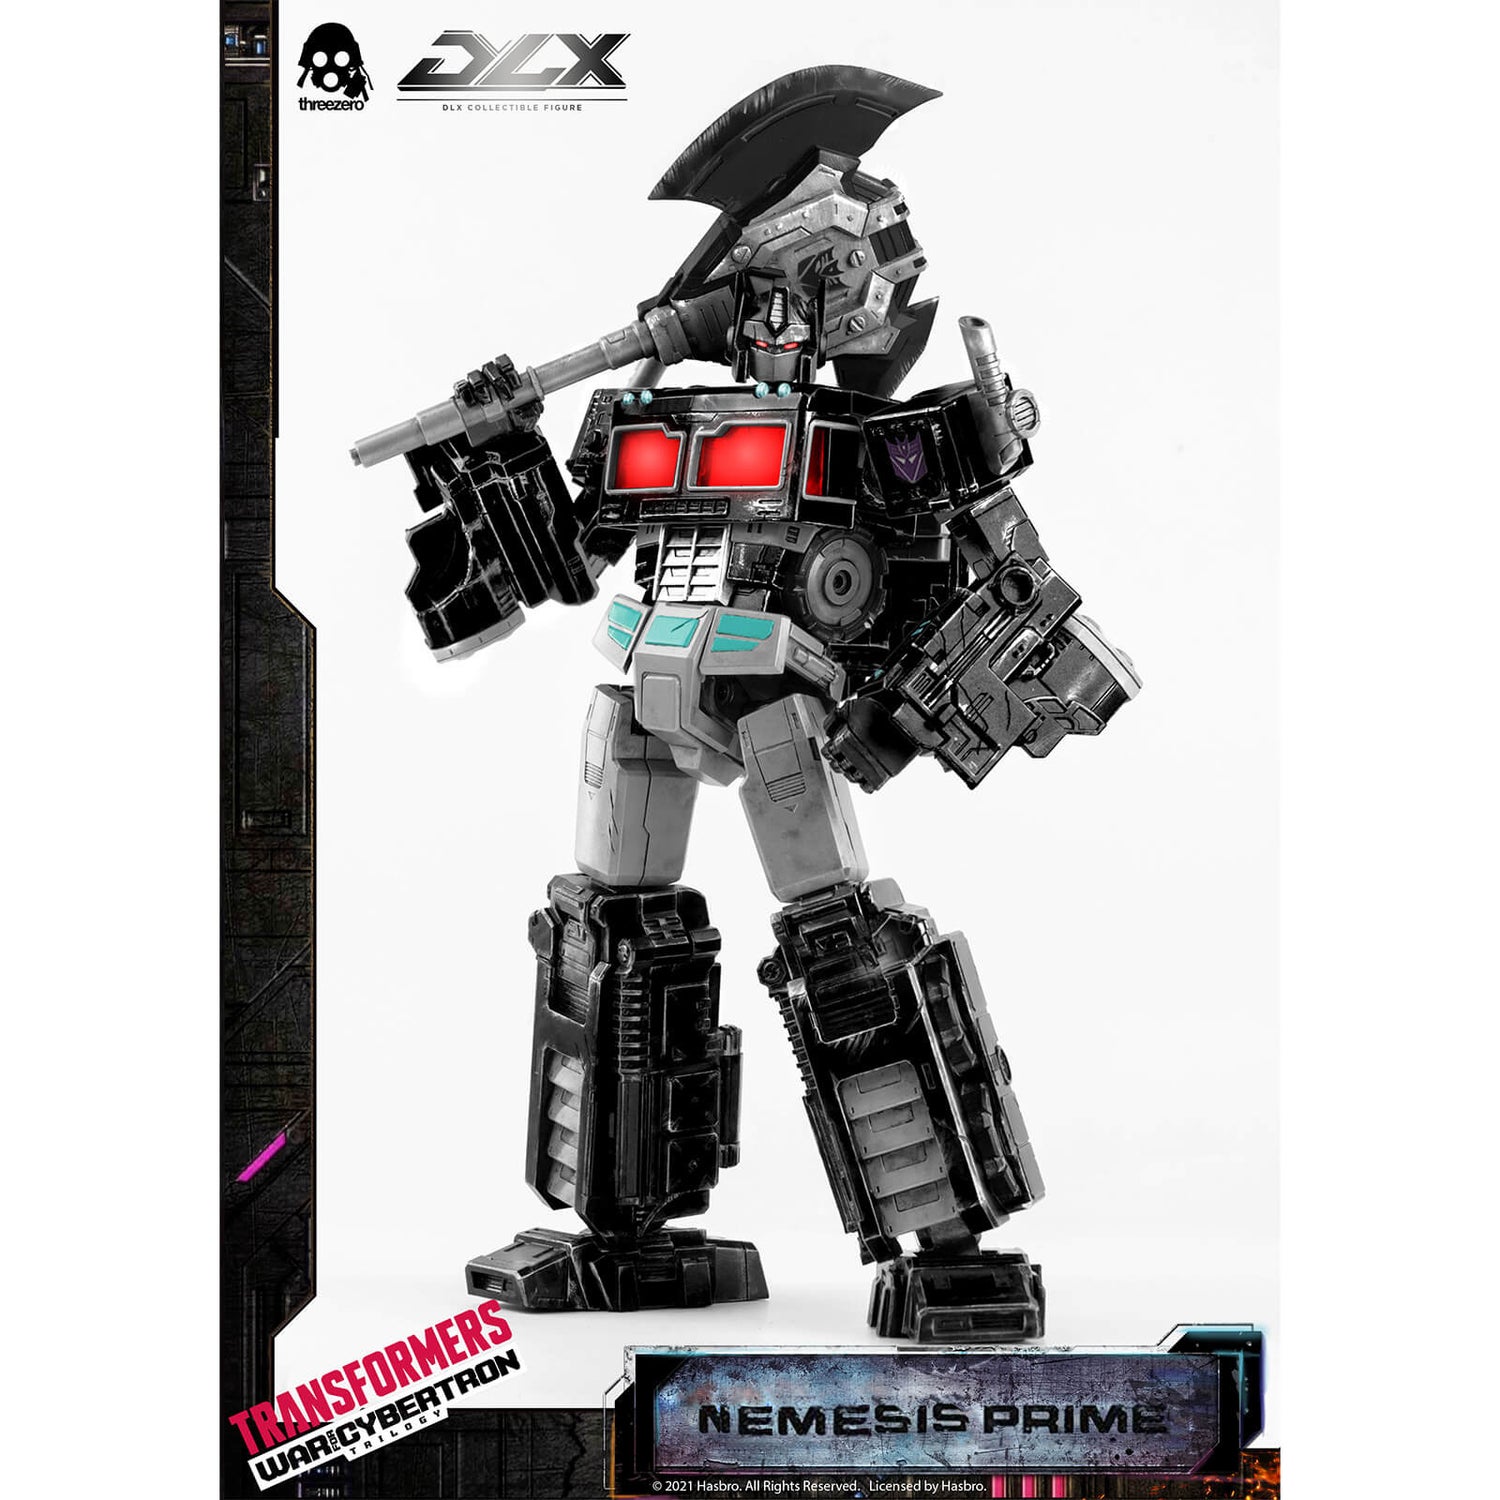 ThreeZero Transformers: War For Cybertron DLX Collectible Figure - Nemesis Prime